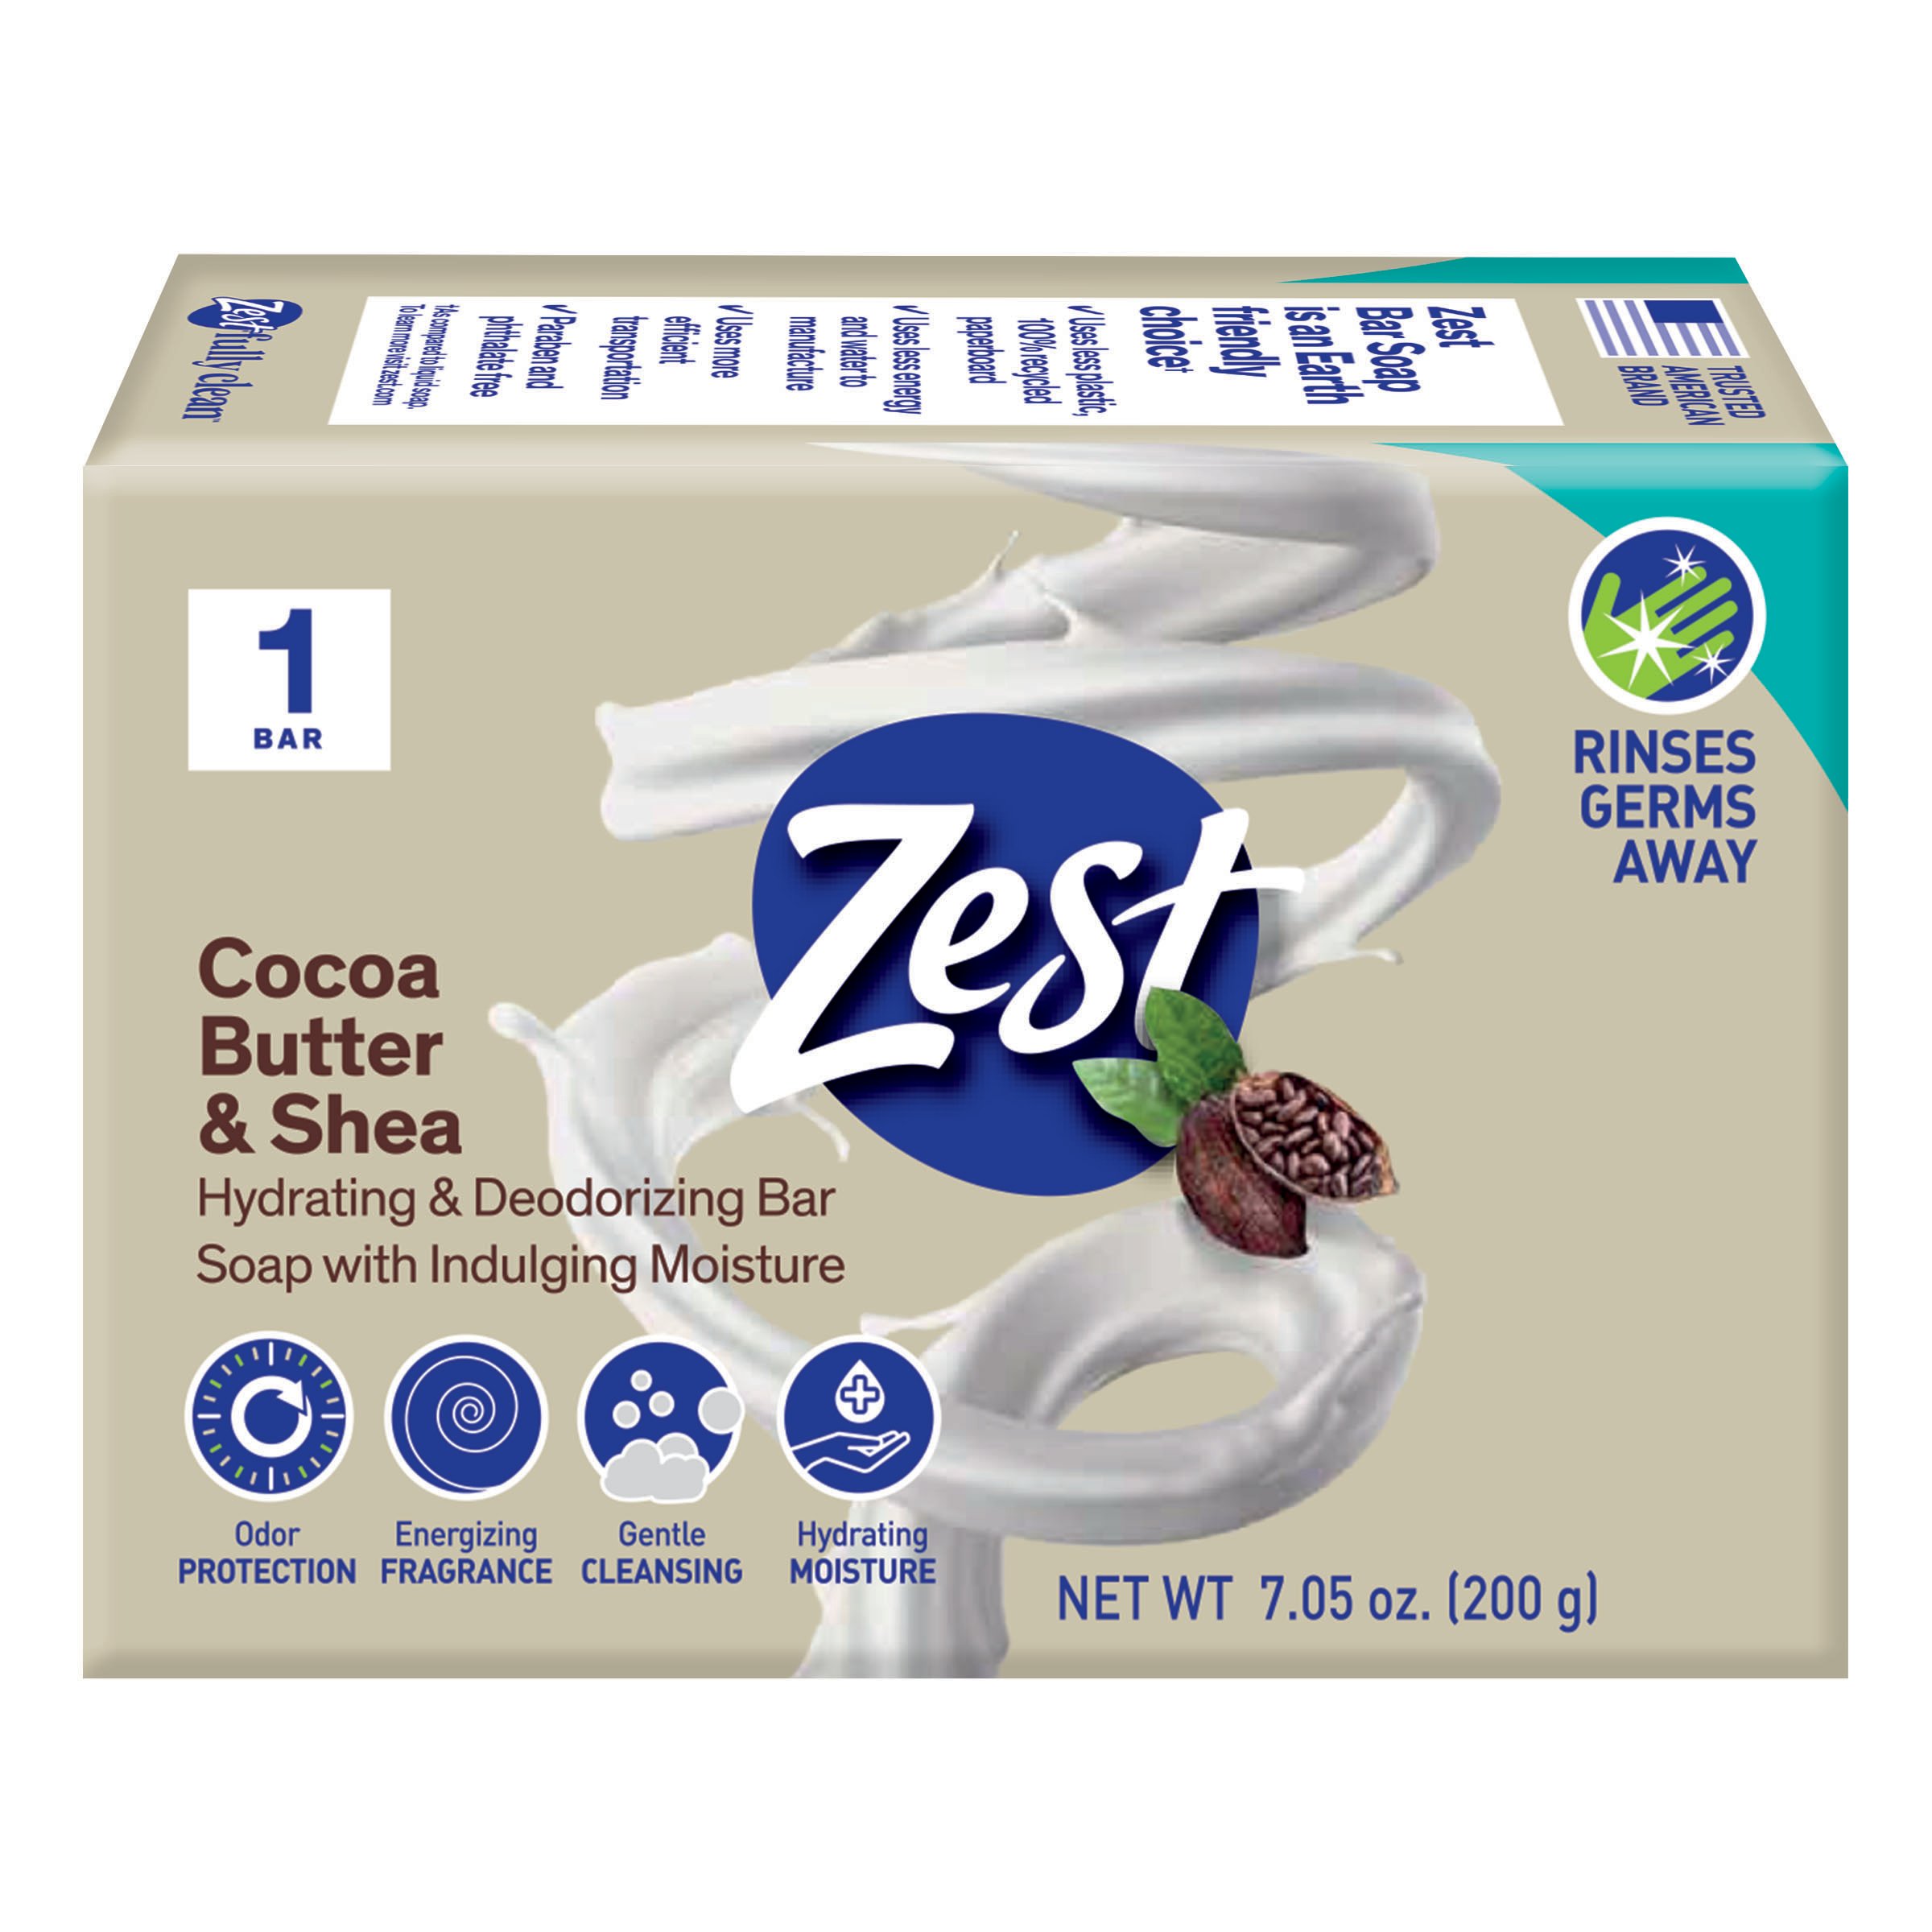 Zest Bar Soap - Cocoa Butter & Shea - Shop Hand & Bar Soap at H-E-B